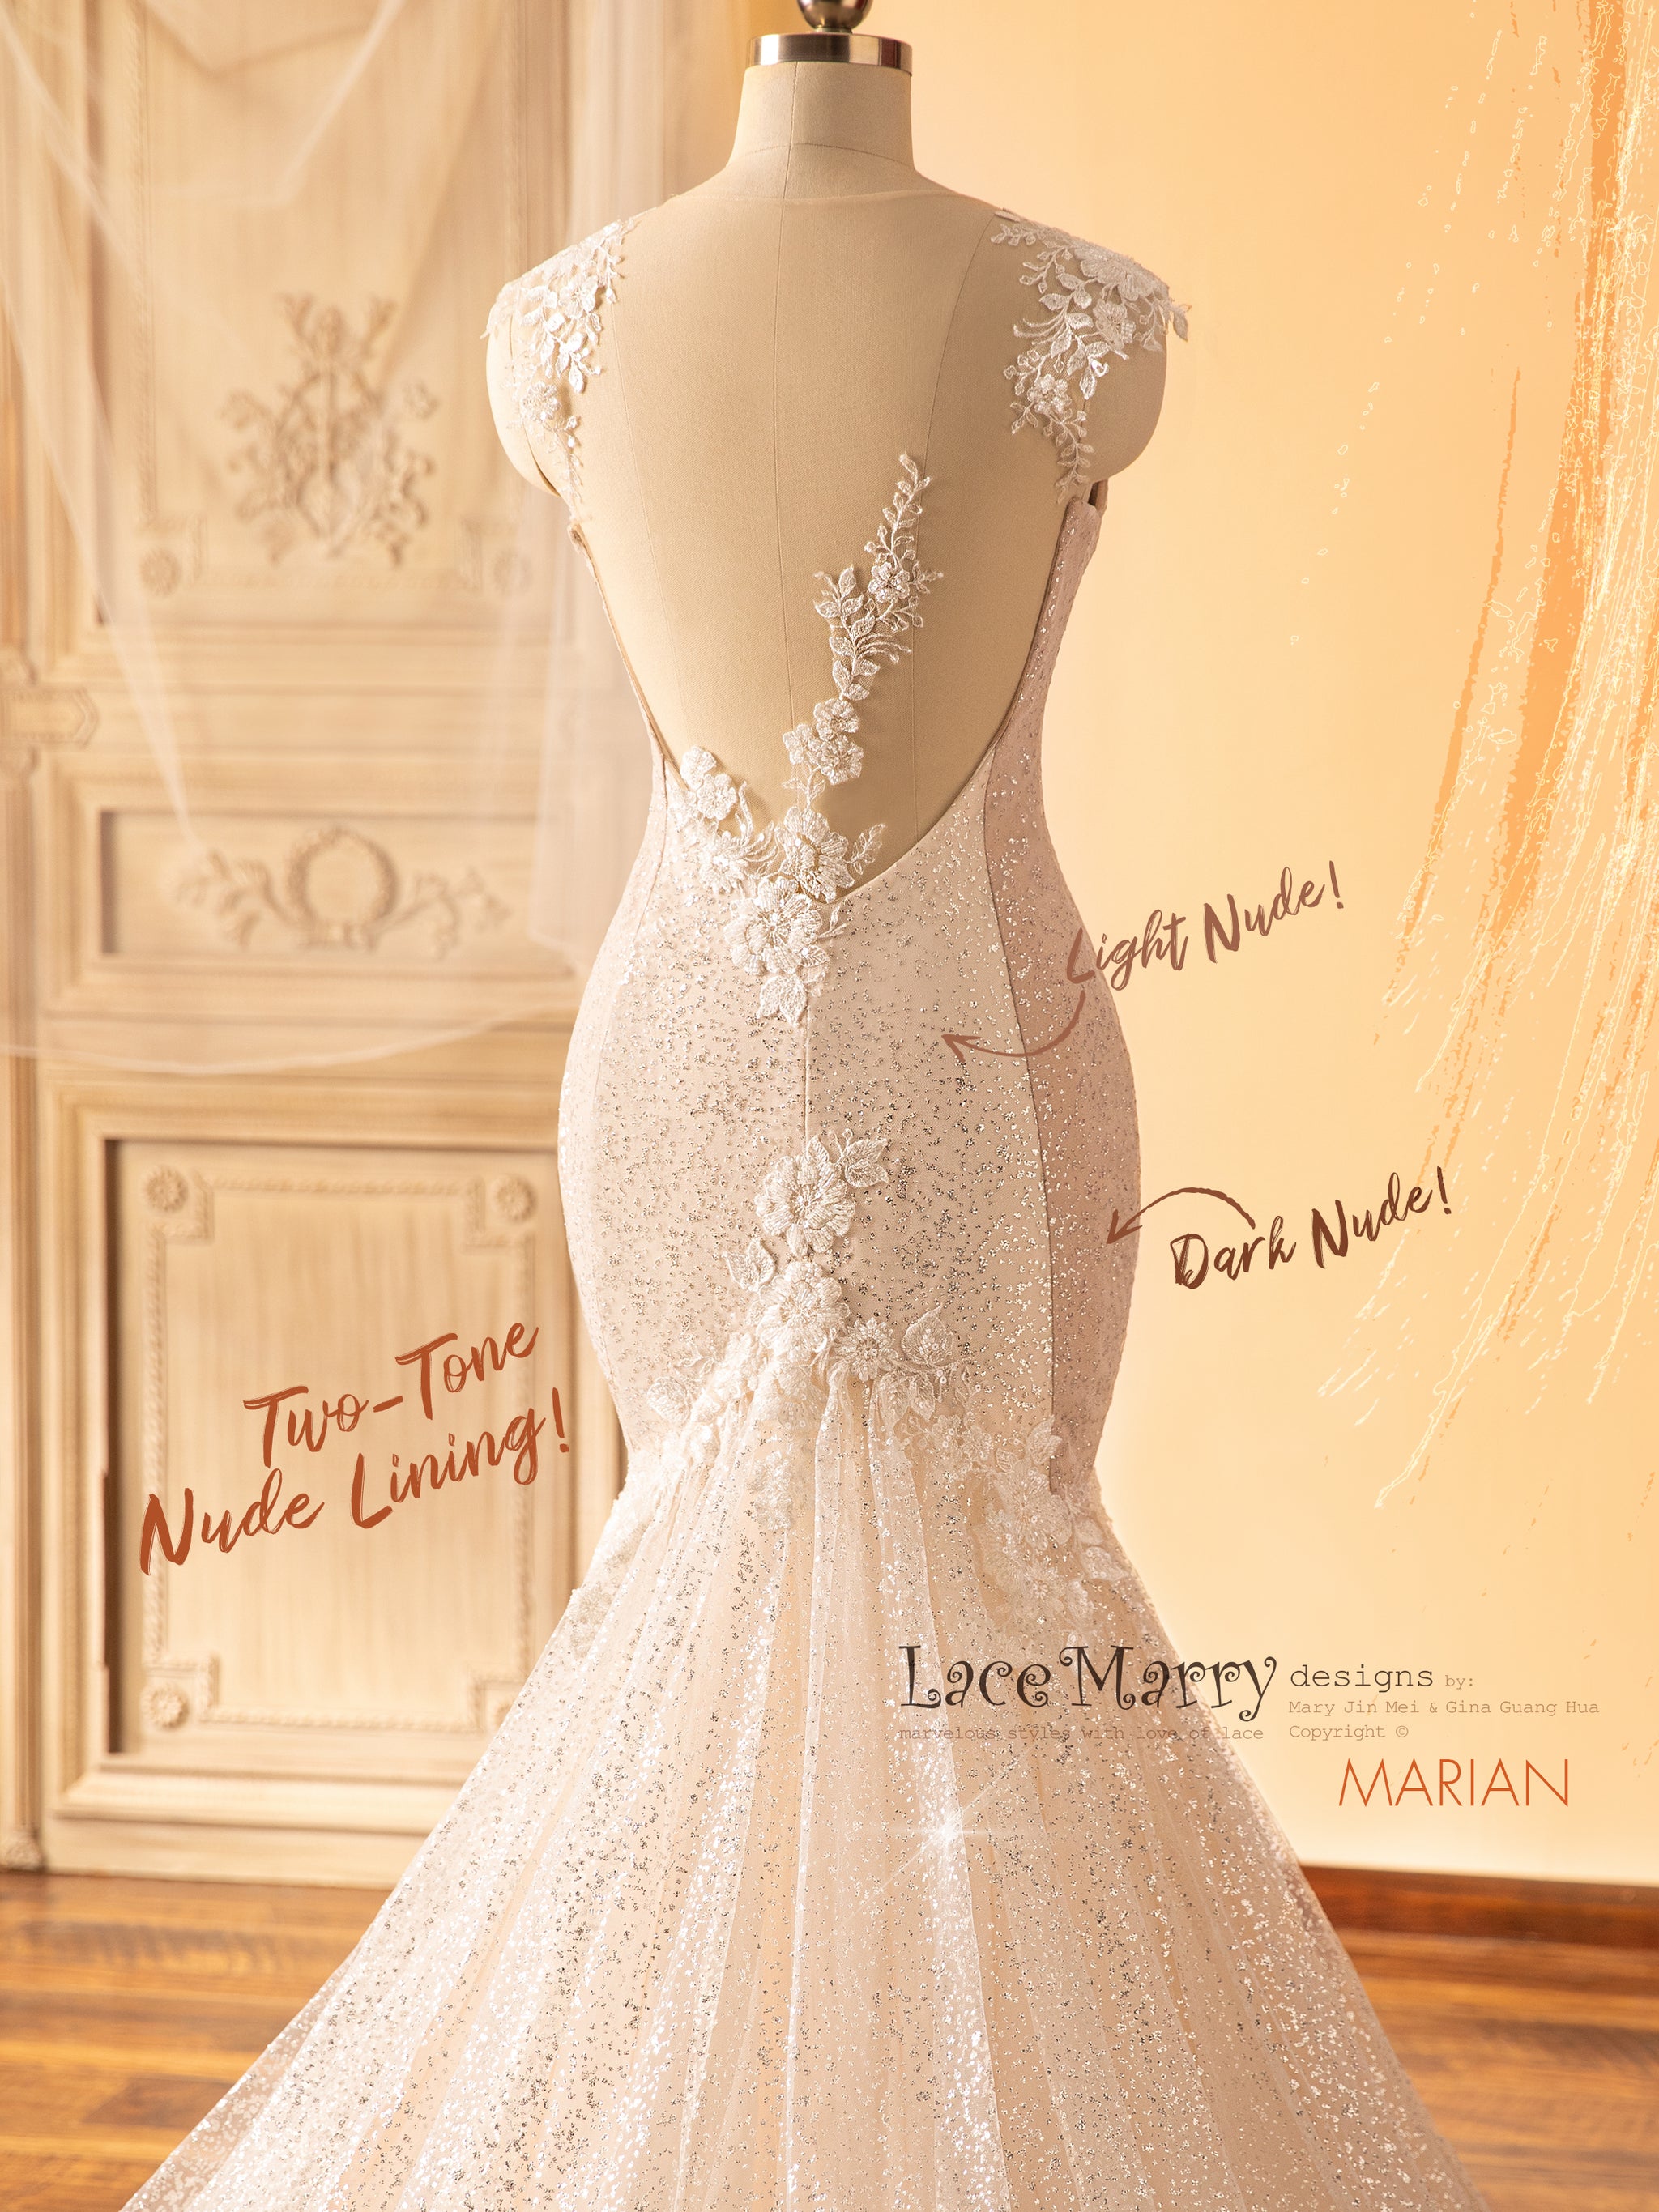 Sparkly White Glitter Plunging V-neck Long Wedding Gown - VQ